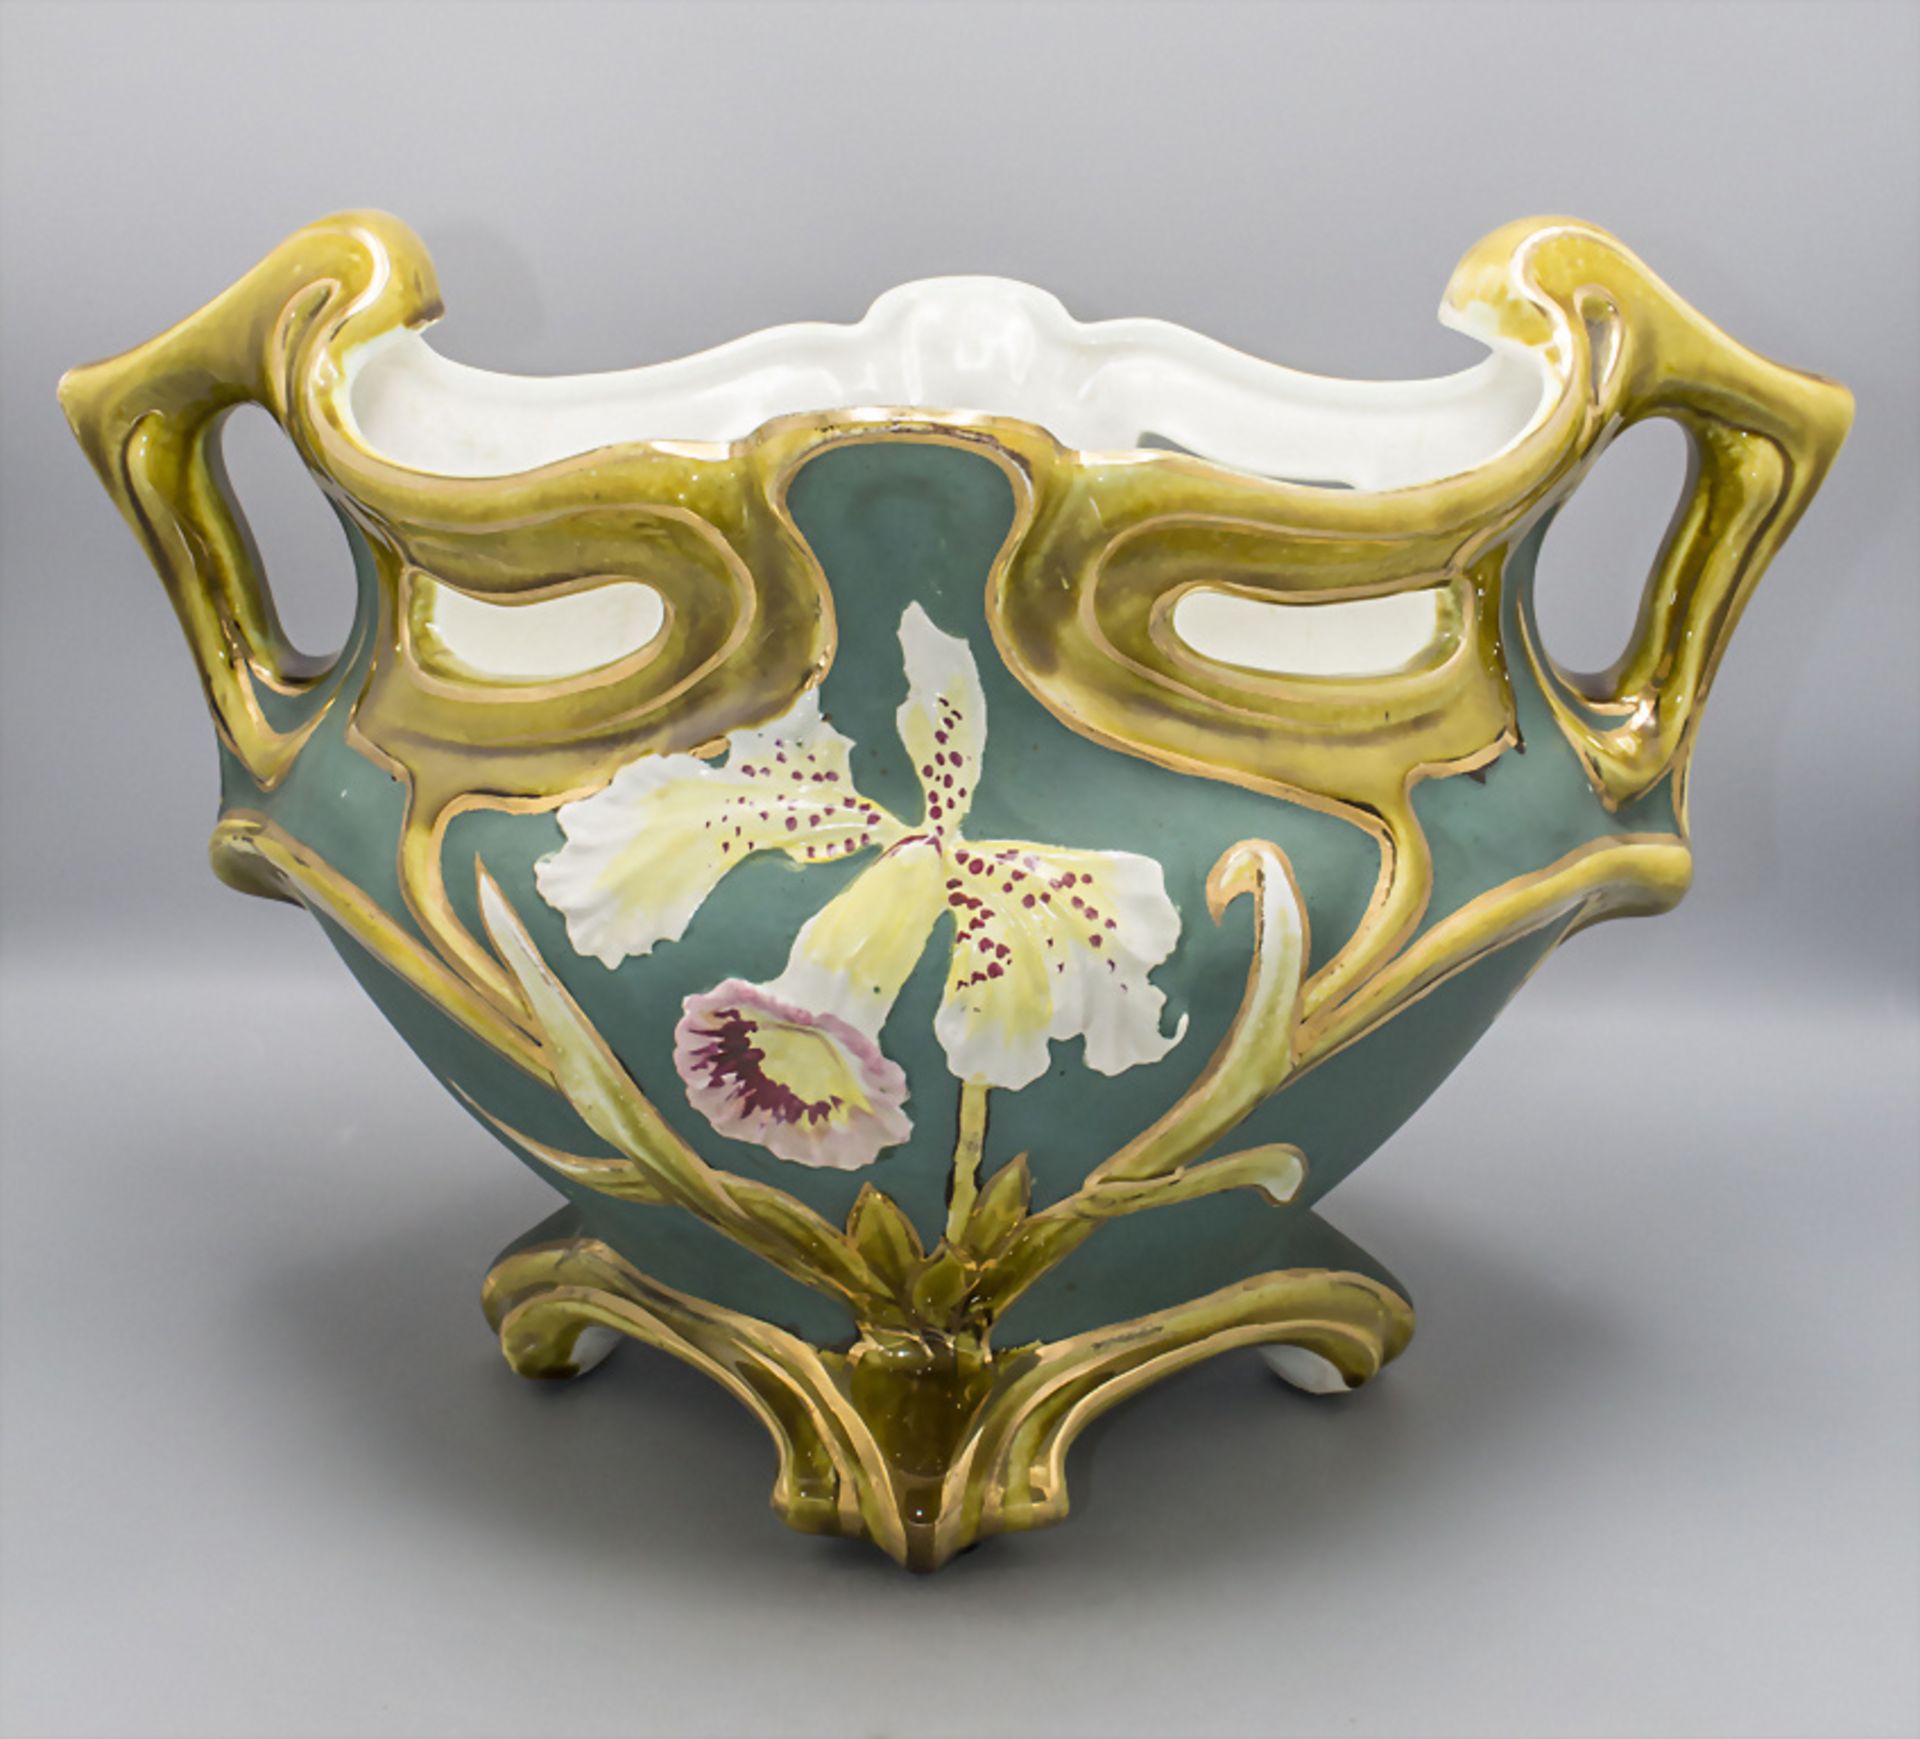 Keramikschale / A ceramic bowl, 20. Jh. - Image 4 of 7